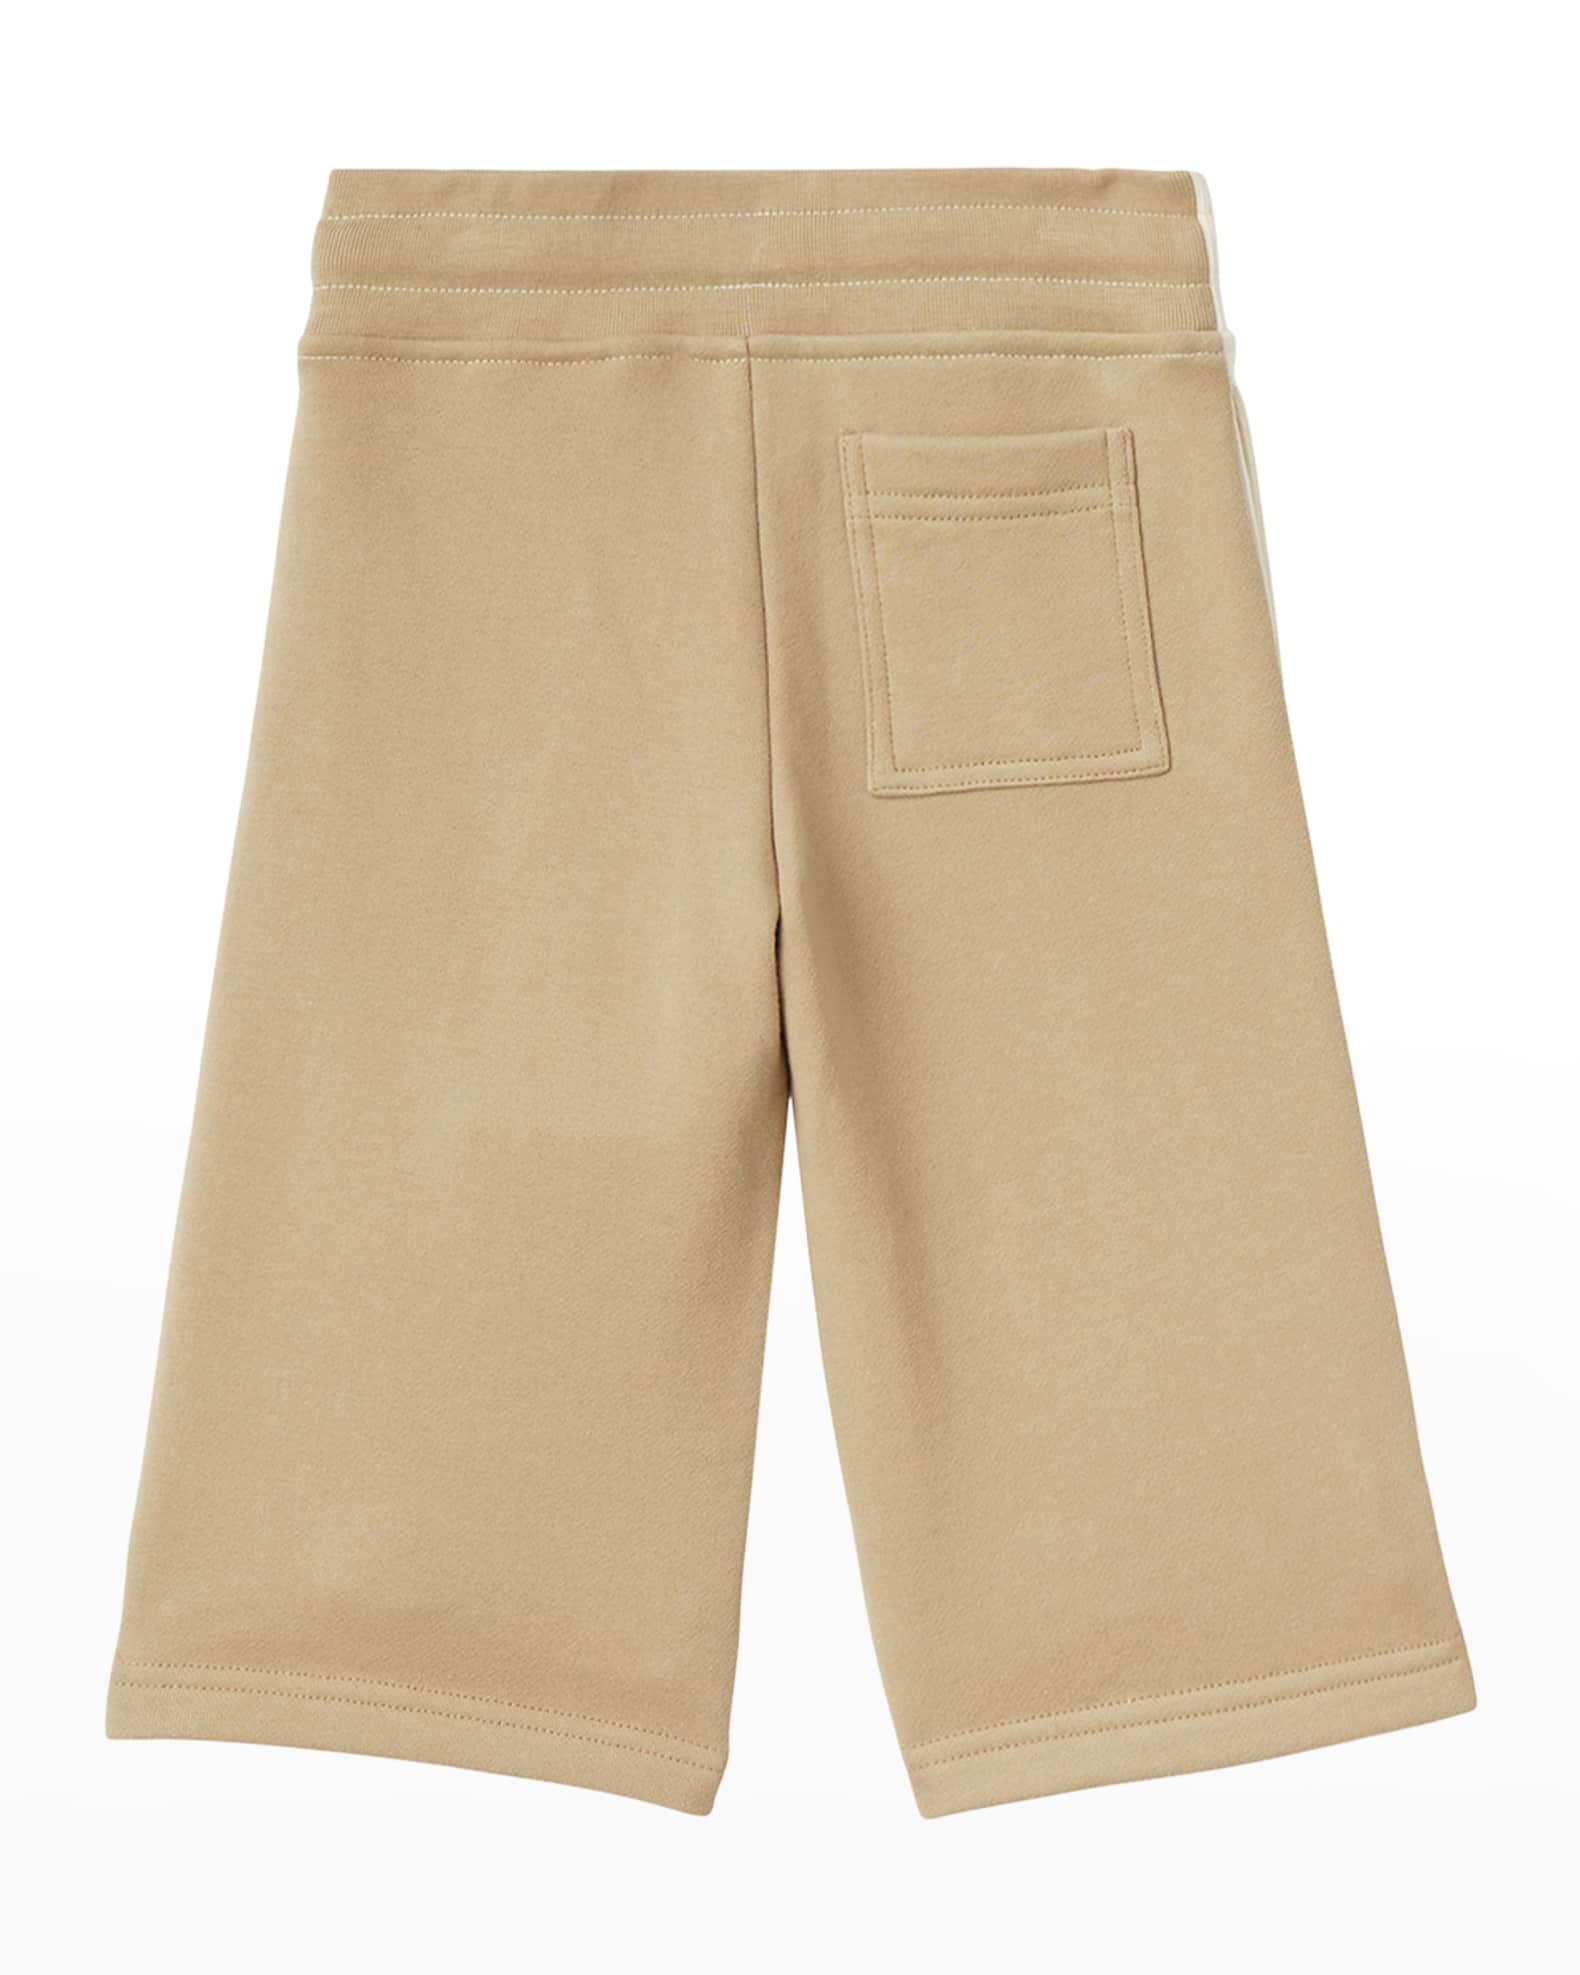 Burberry Girl's Aubrey Two-Tone Sweat Shorts, Size 6M-2 | Neiman Marcus